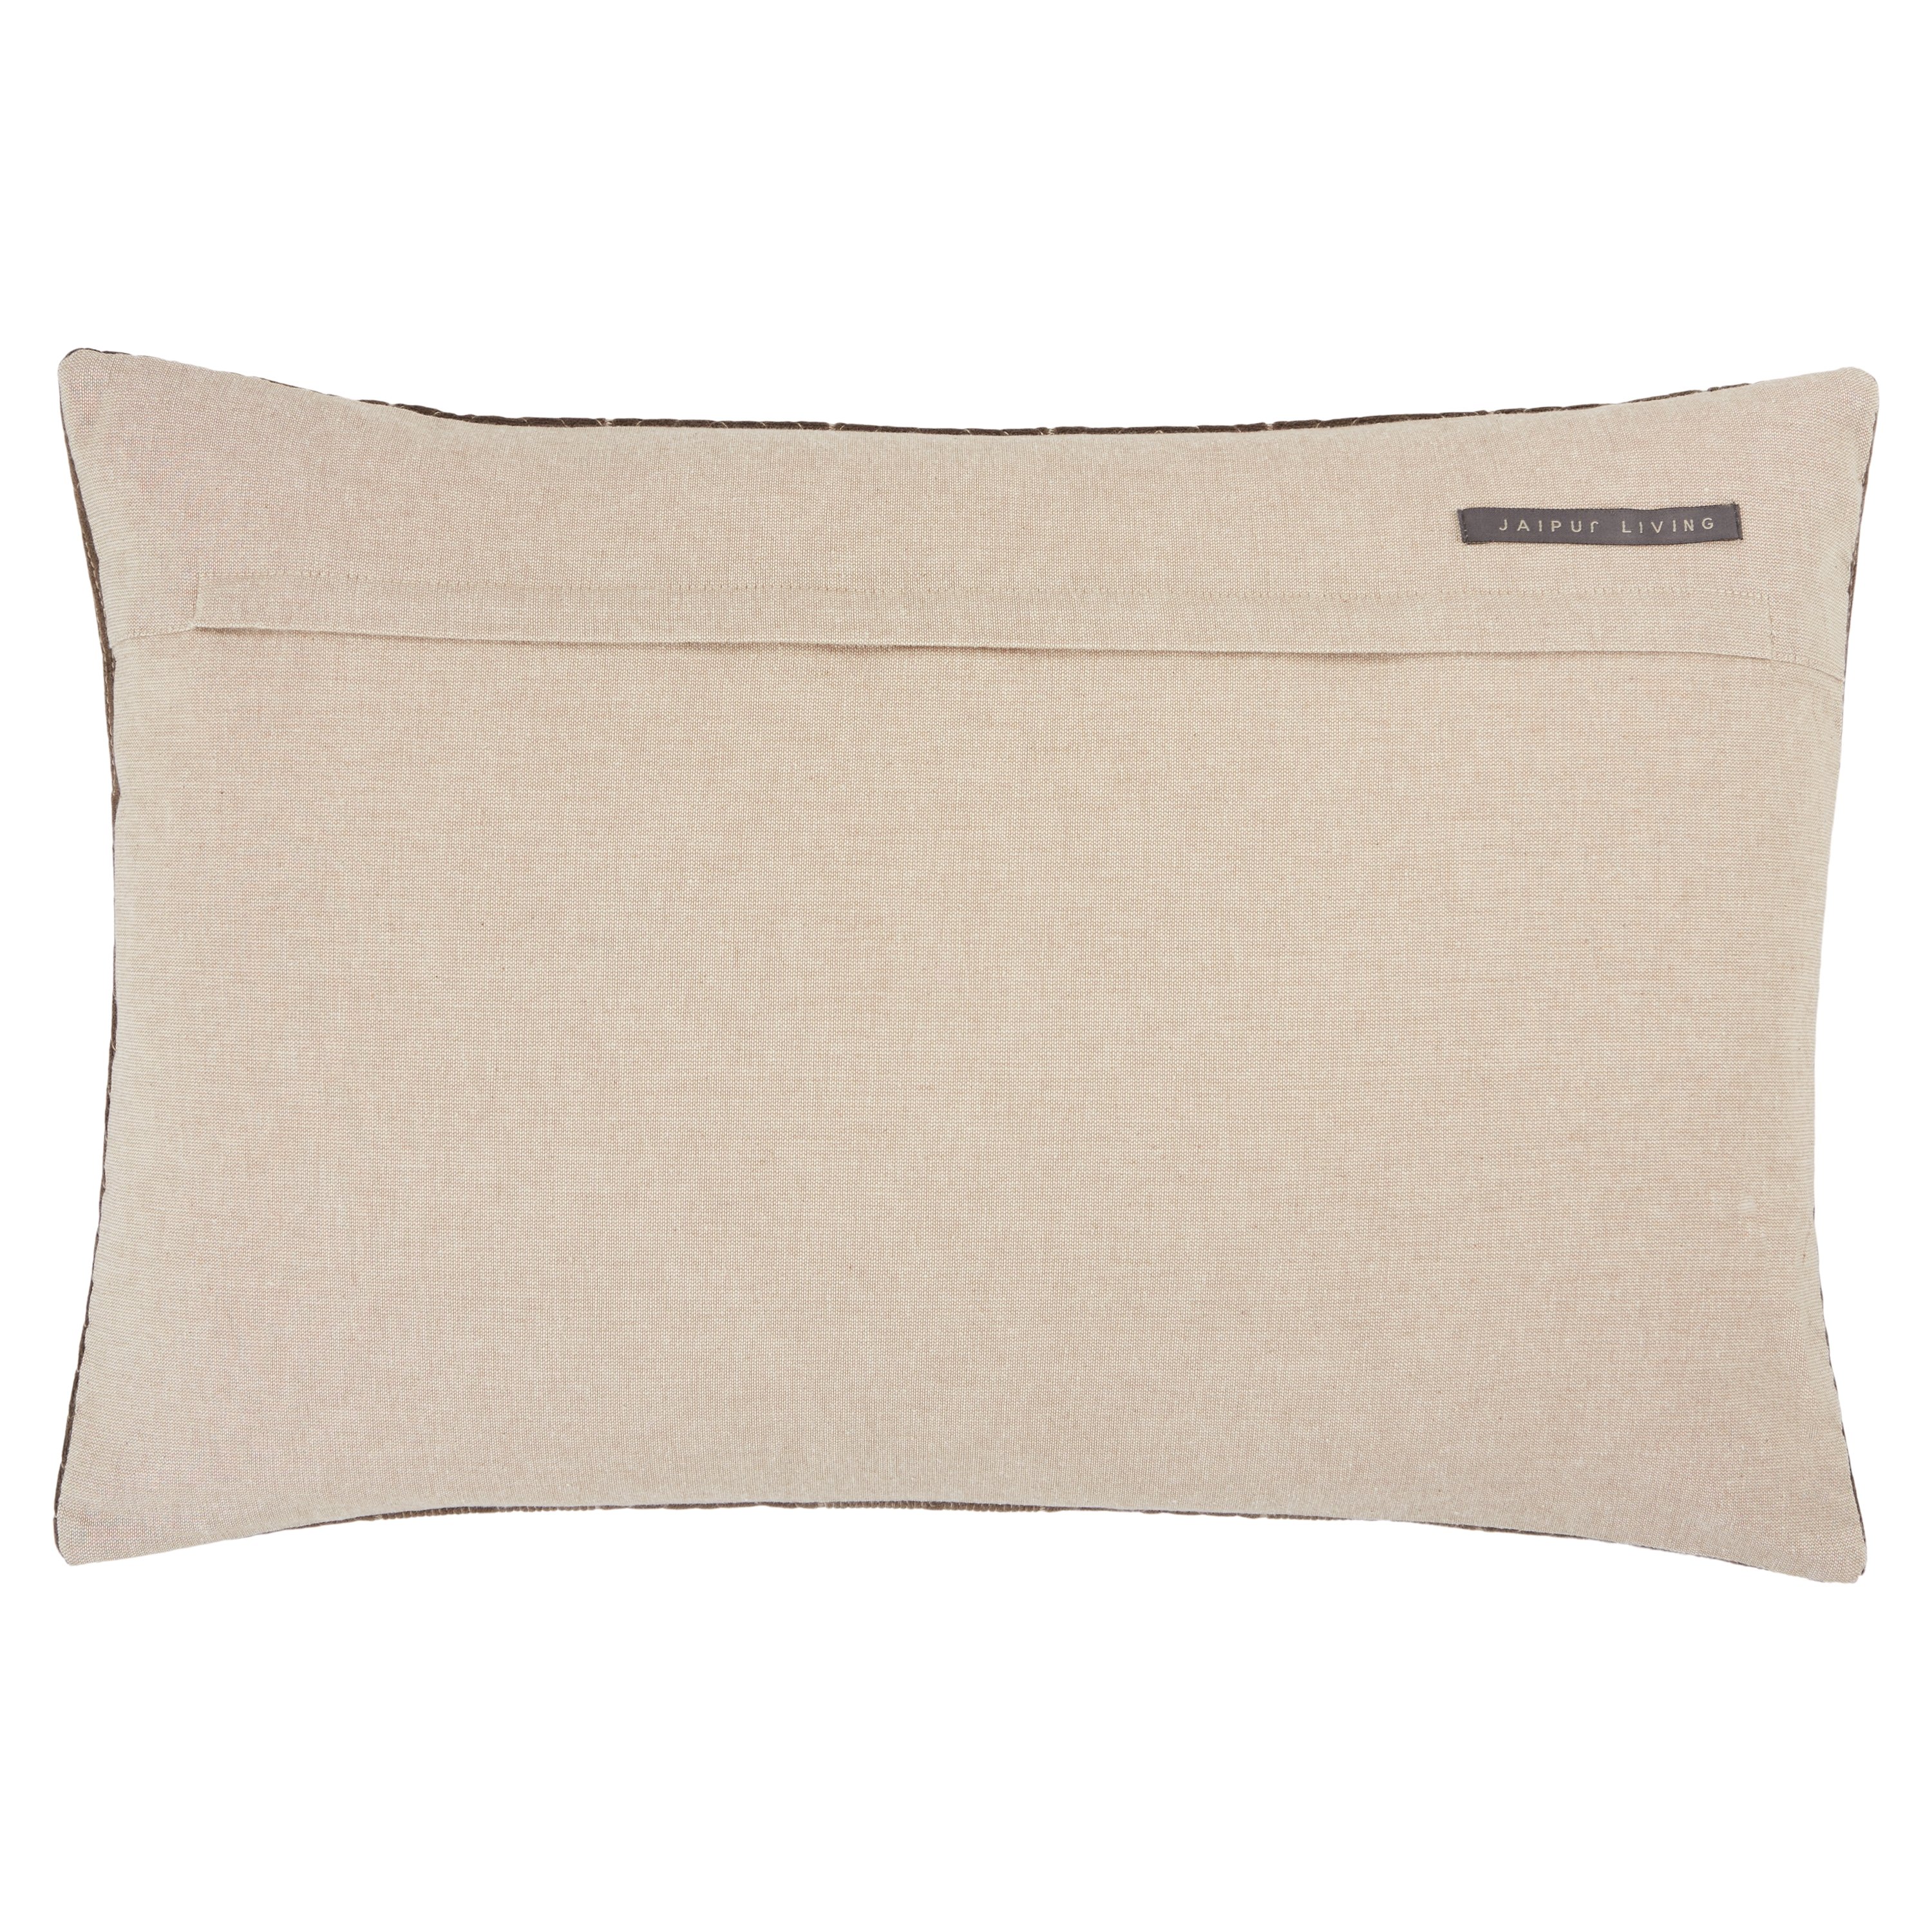 Design (US) Dark Taupe 16"X24" Pillow - Image 1